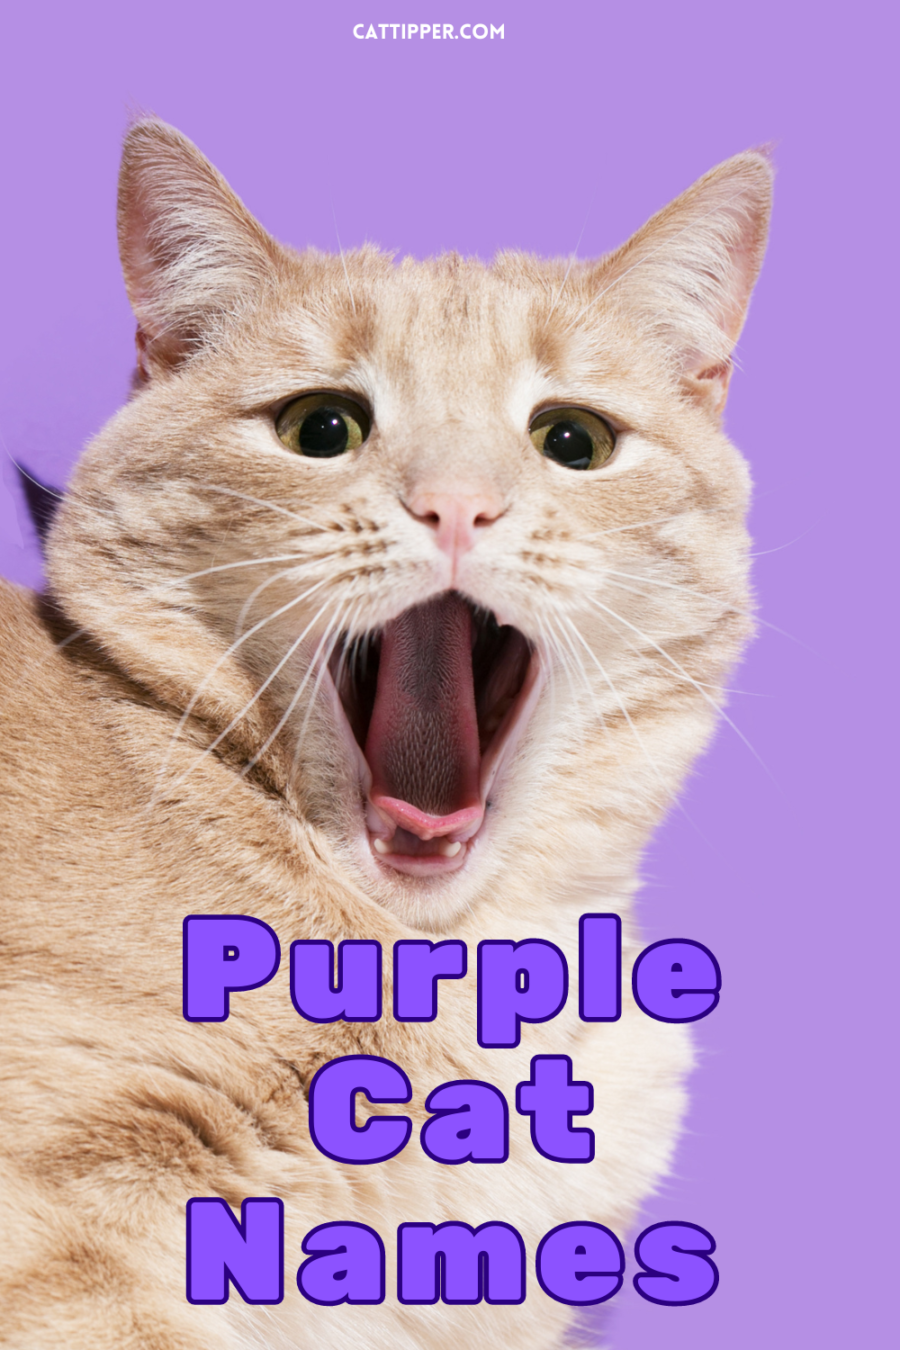 orange cat looking at camera with purple cat names title superimposed below